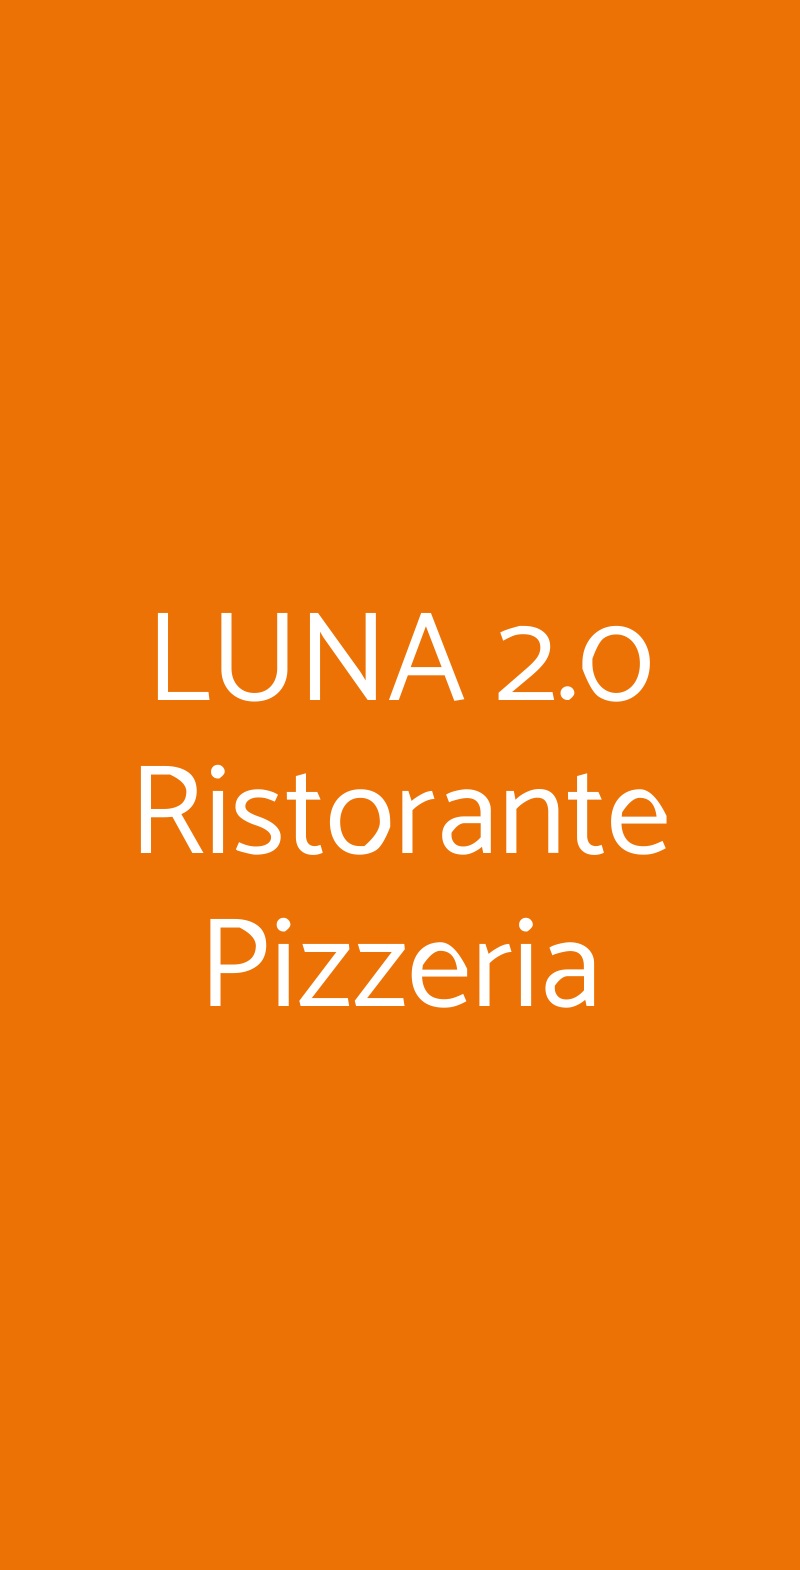 LUNA 2.0 Ristorante Pizzeria Caorle menù 1 pagina